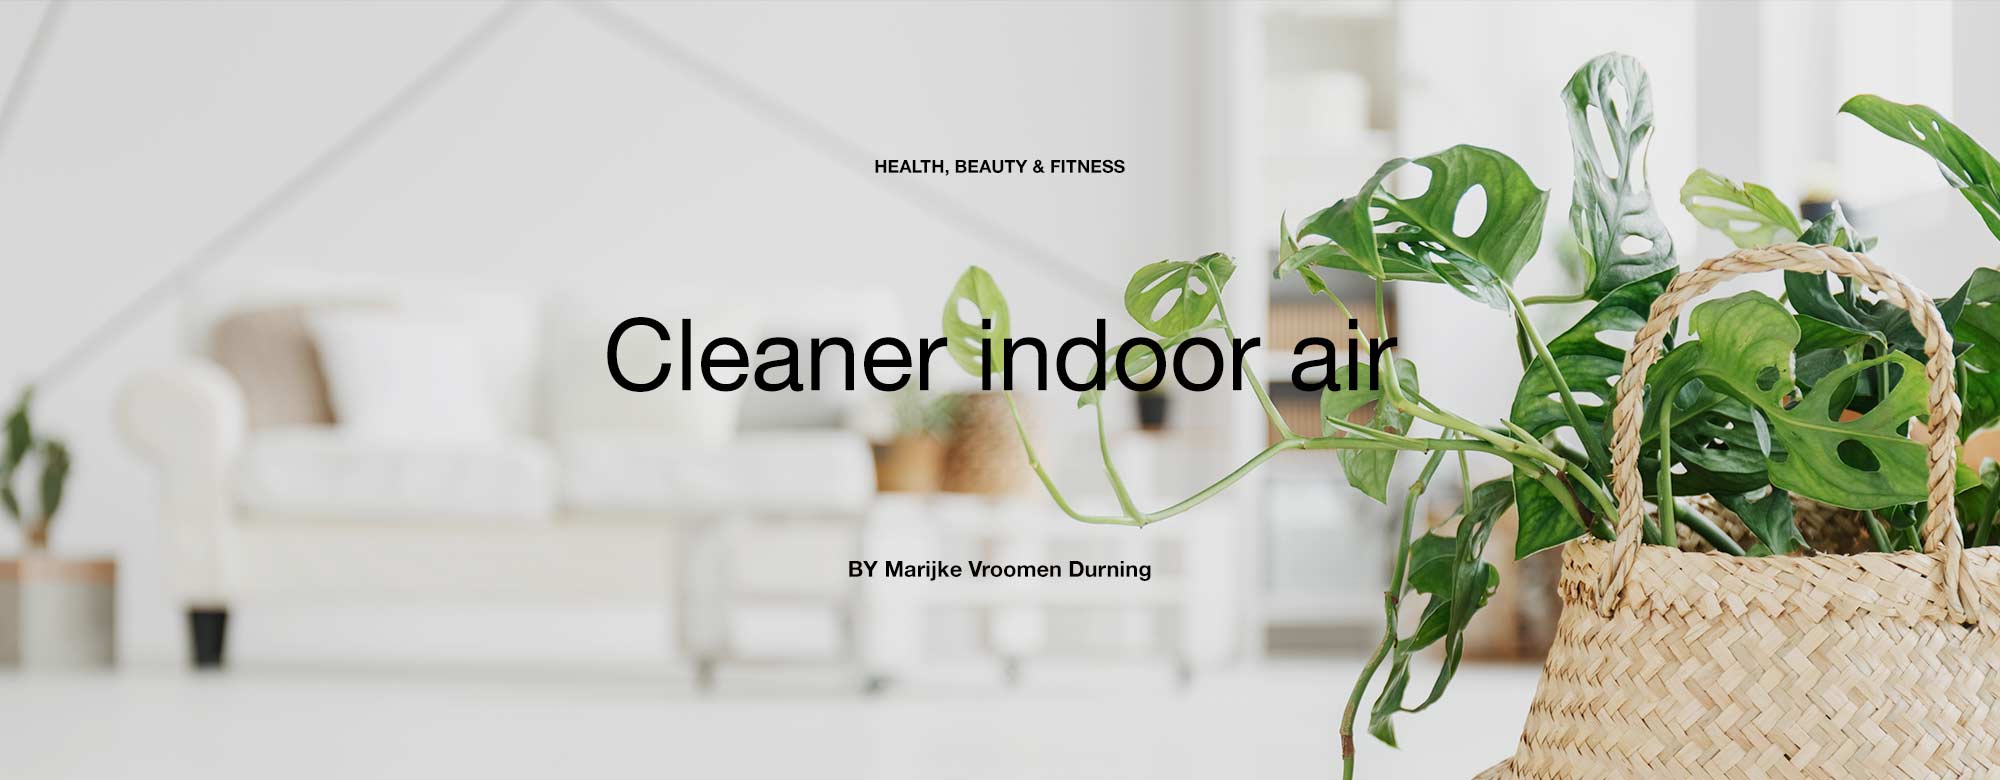 Cleaner indoor air